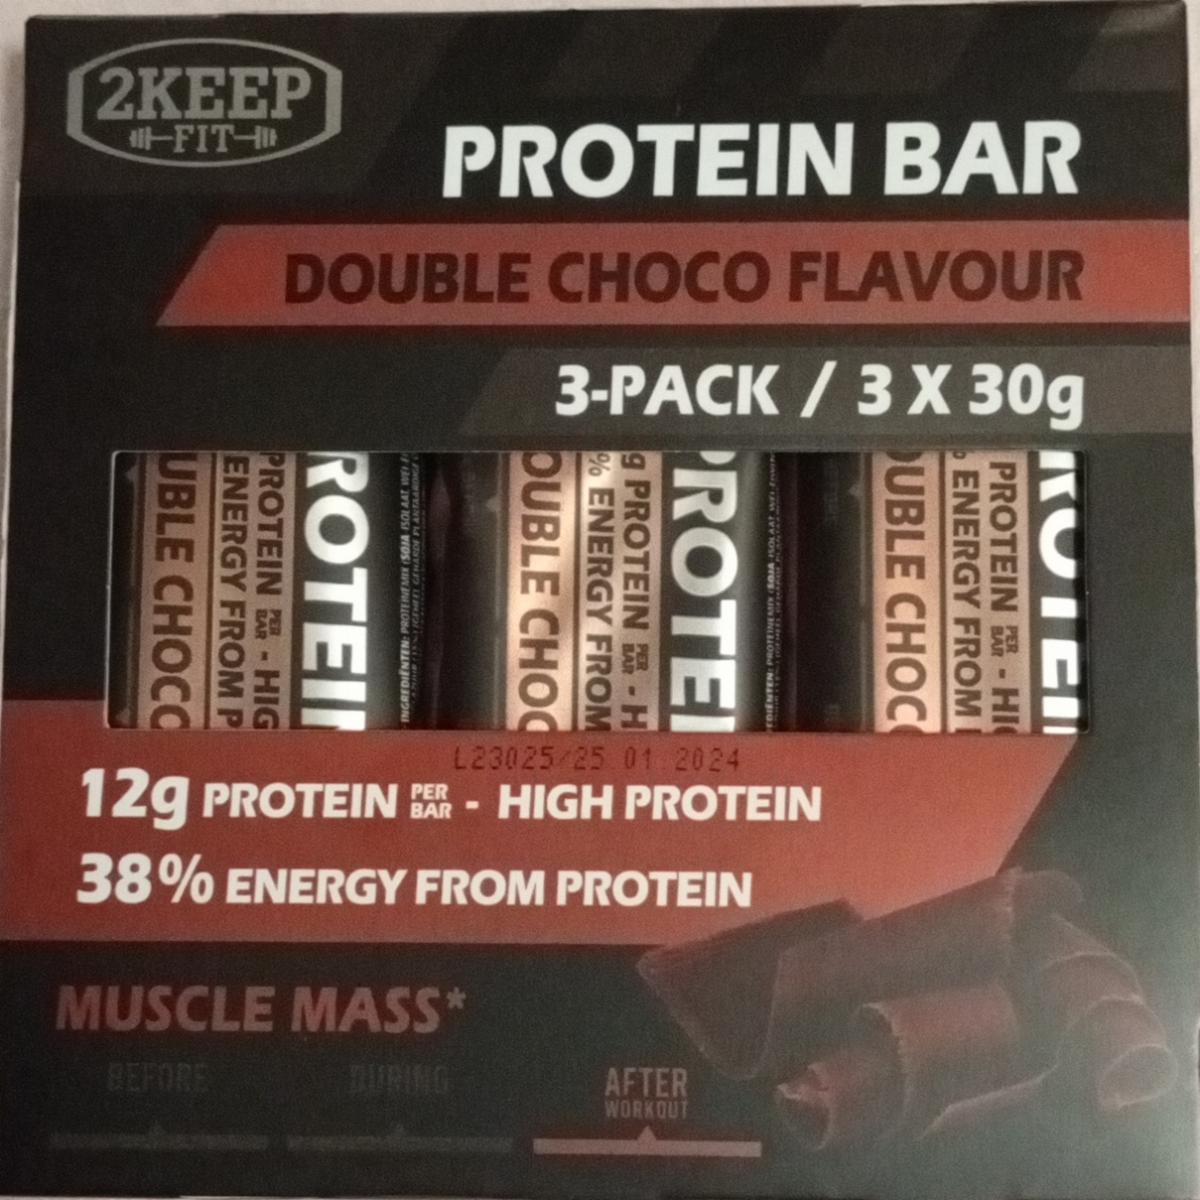 Фото - Протеиновый батончик шоколадный Protein bar Double choco flavour 2KEEP